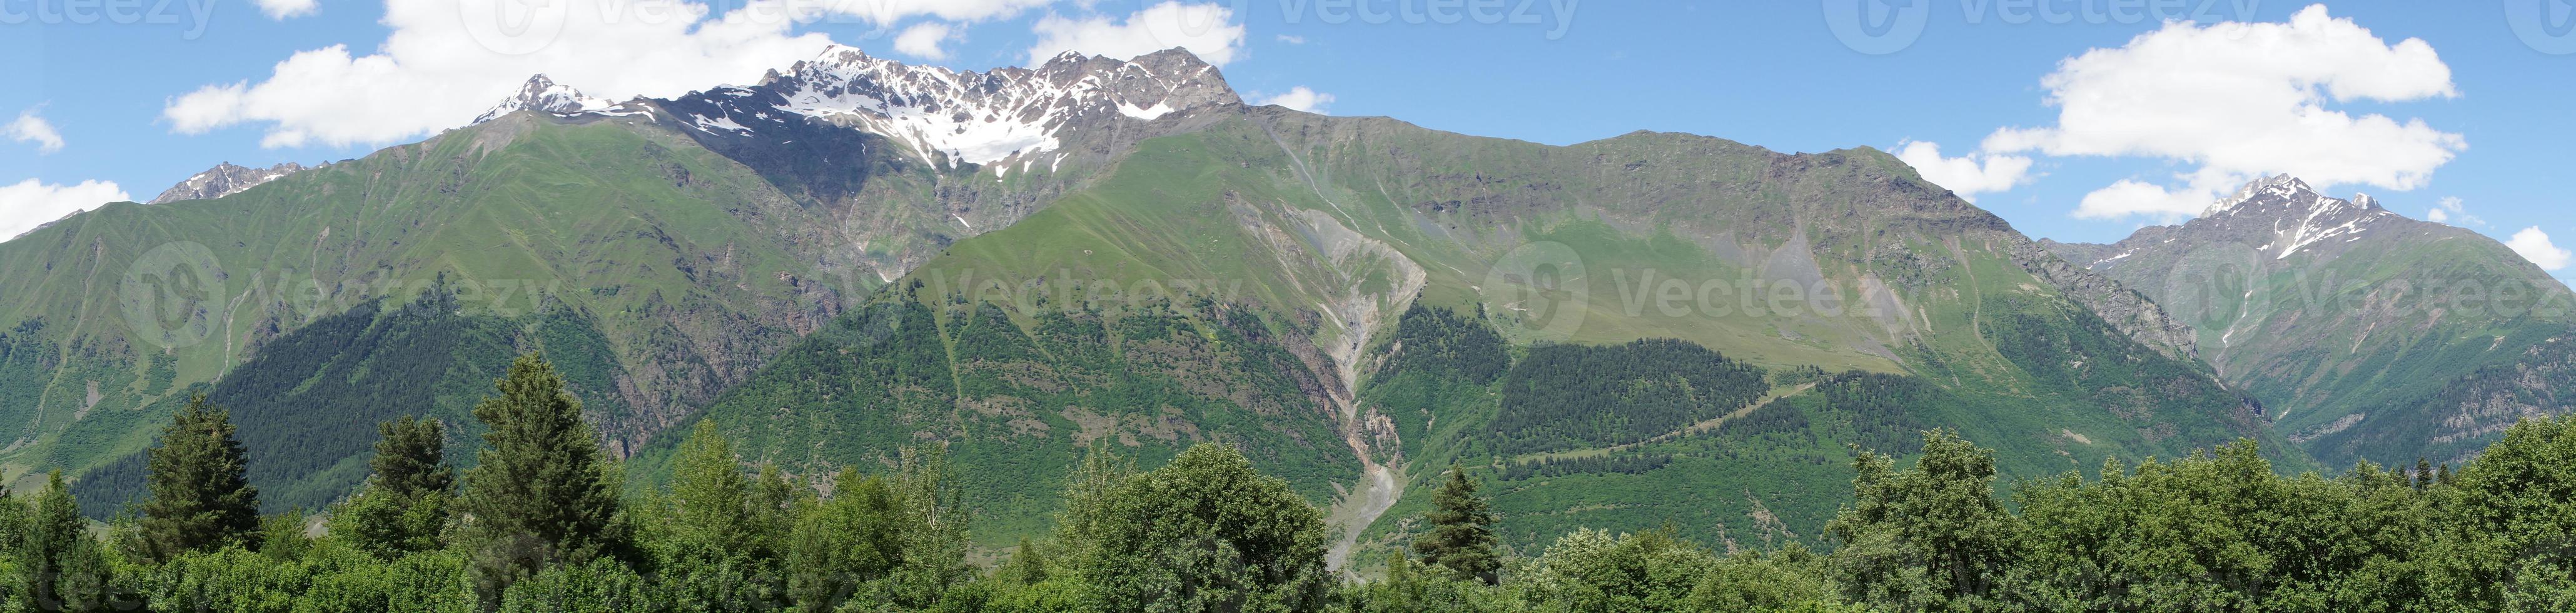 Caucasus Mountains, Swanetia, Georgia, Europe photo